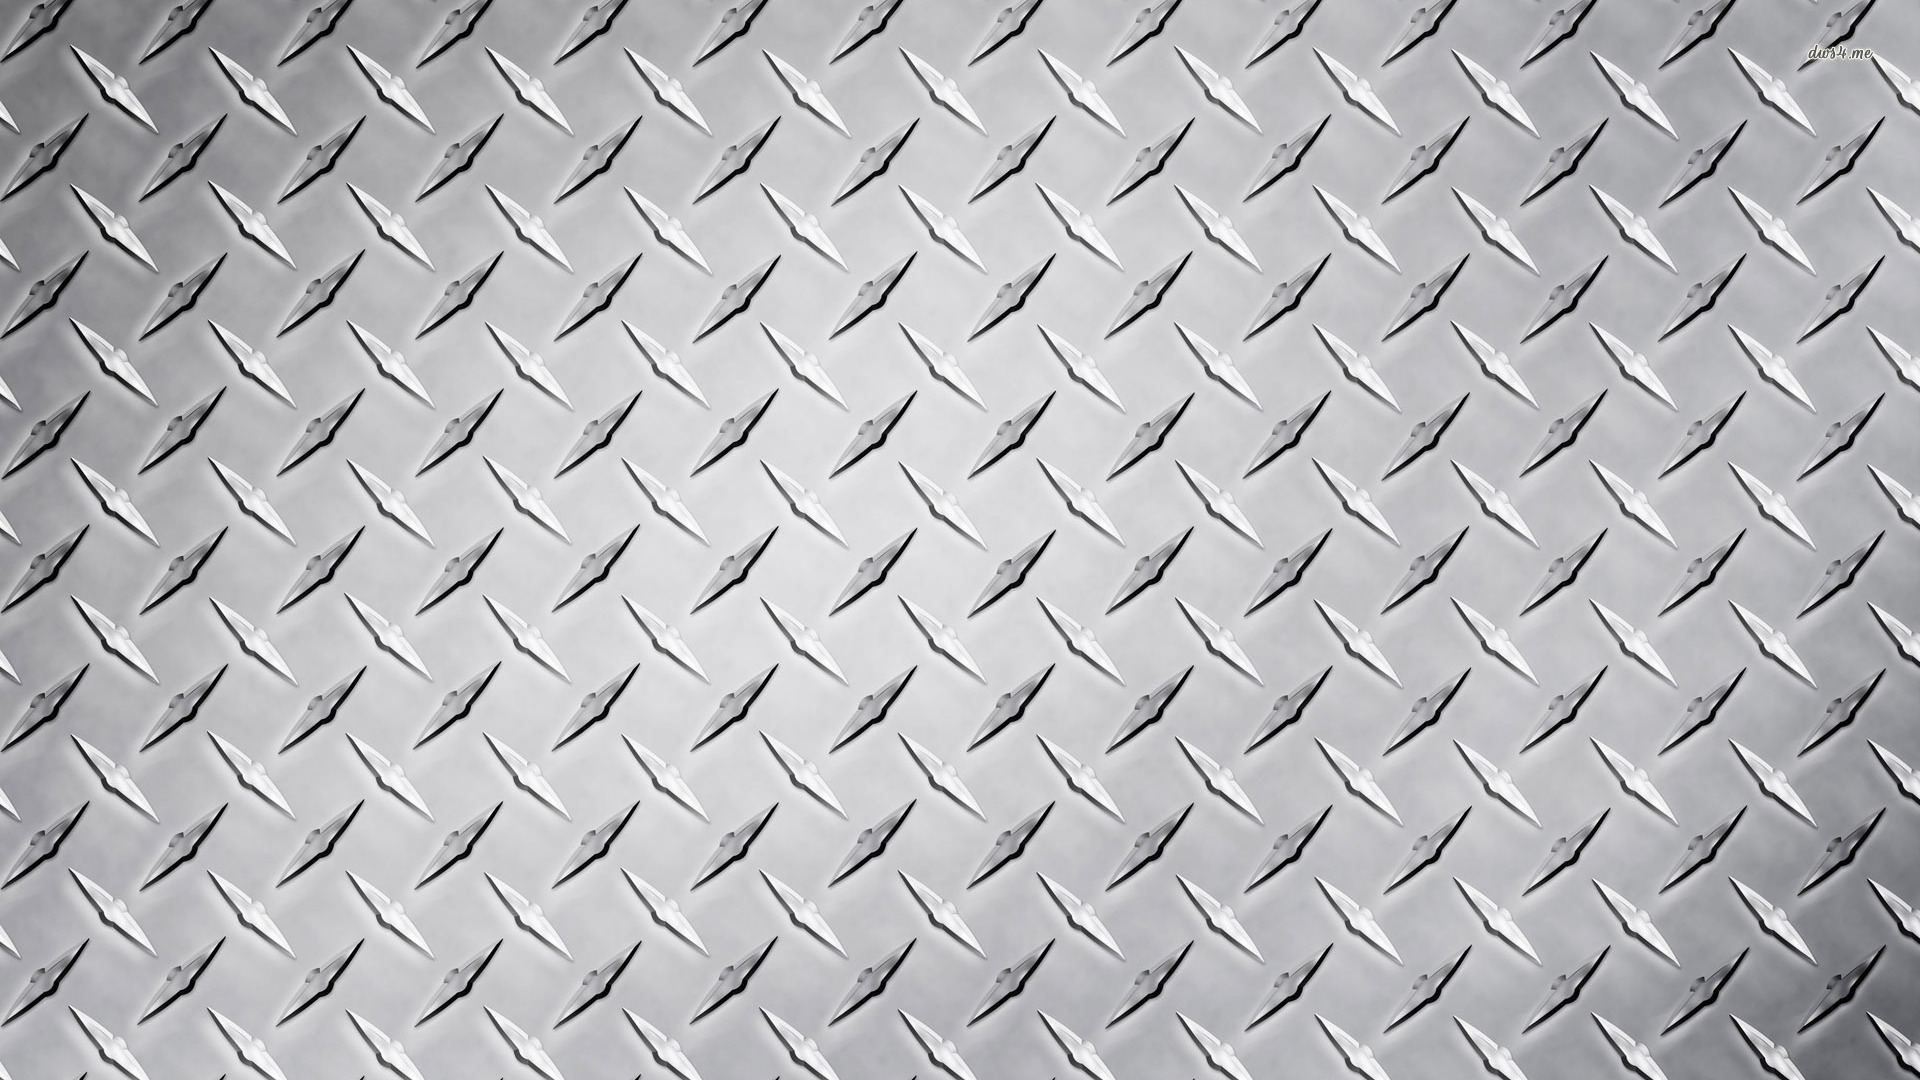 11275 metallic diamond pattern 19201080 abstract wallpaper PSP